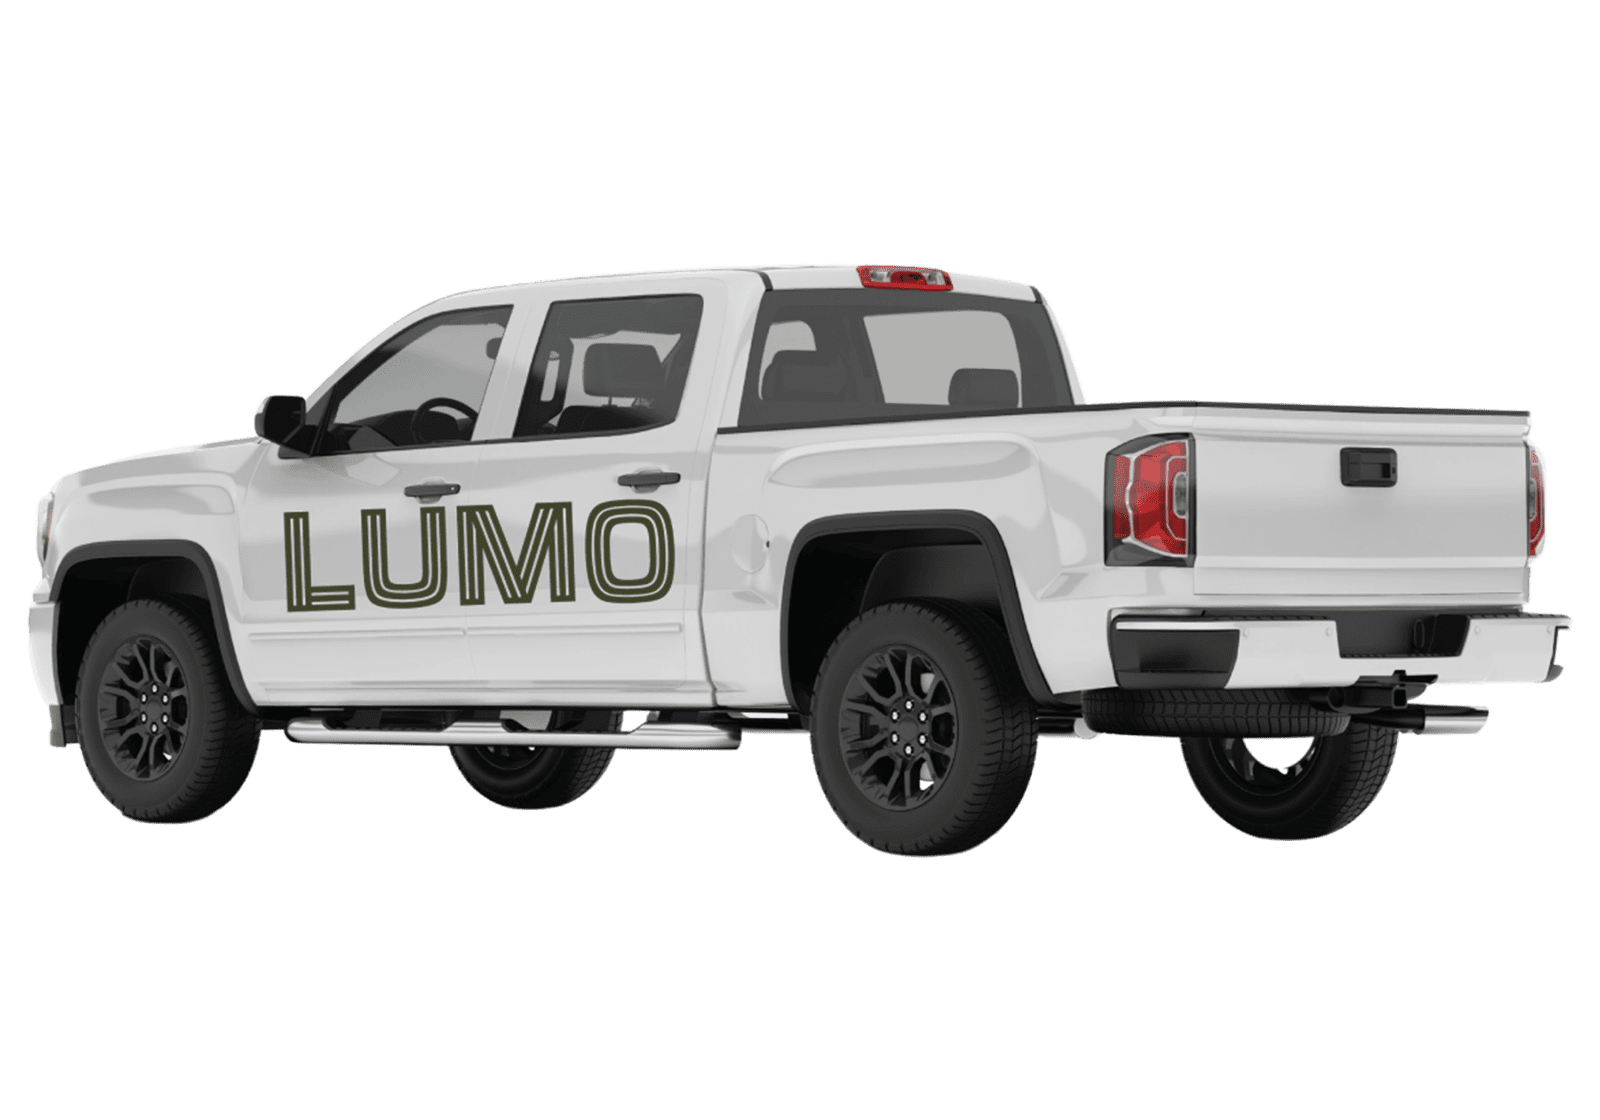 Lumo service truck